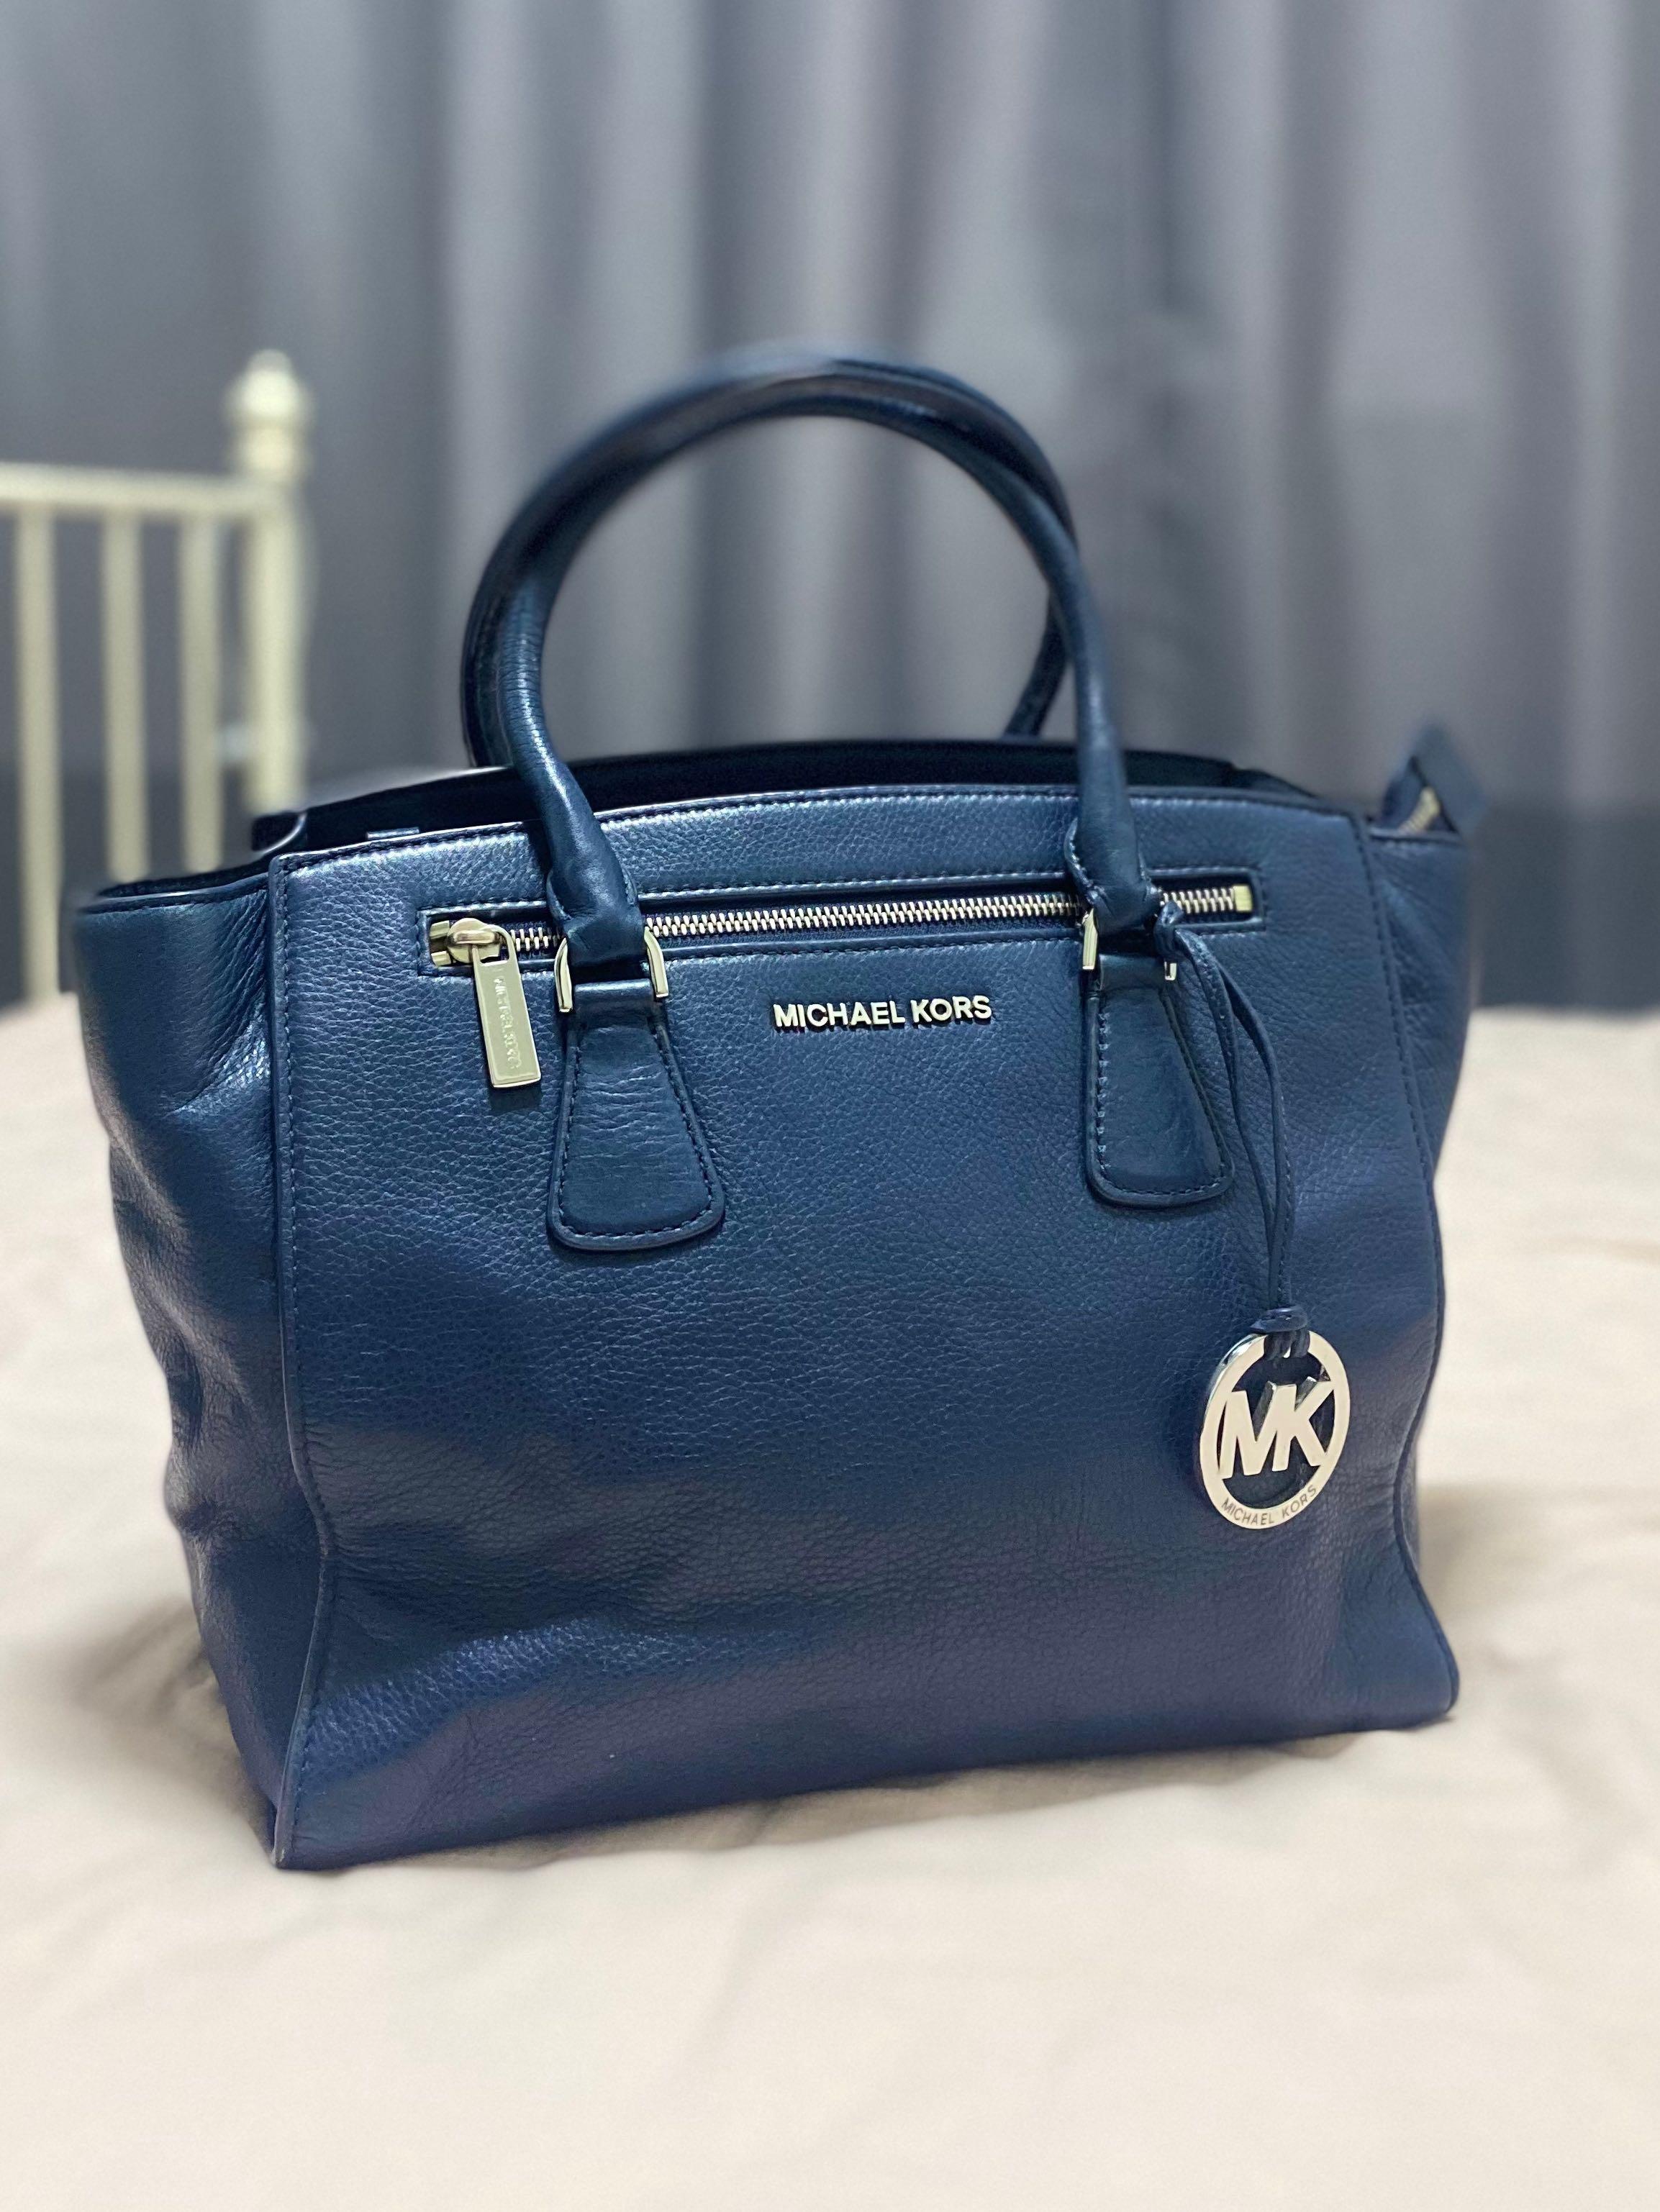 Lot 1111  A Michael Kors navy blue leather handbag